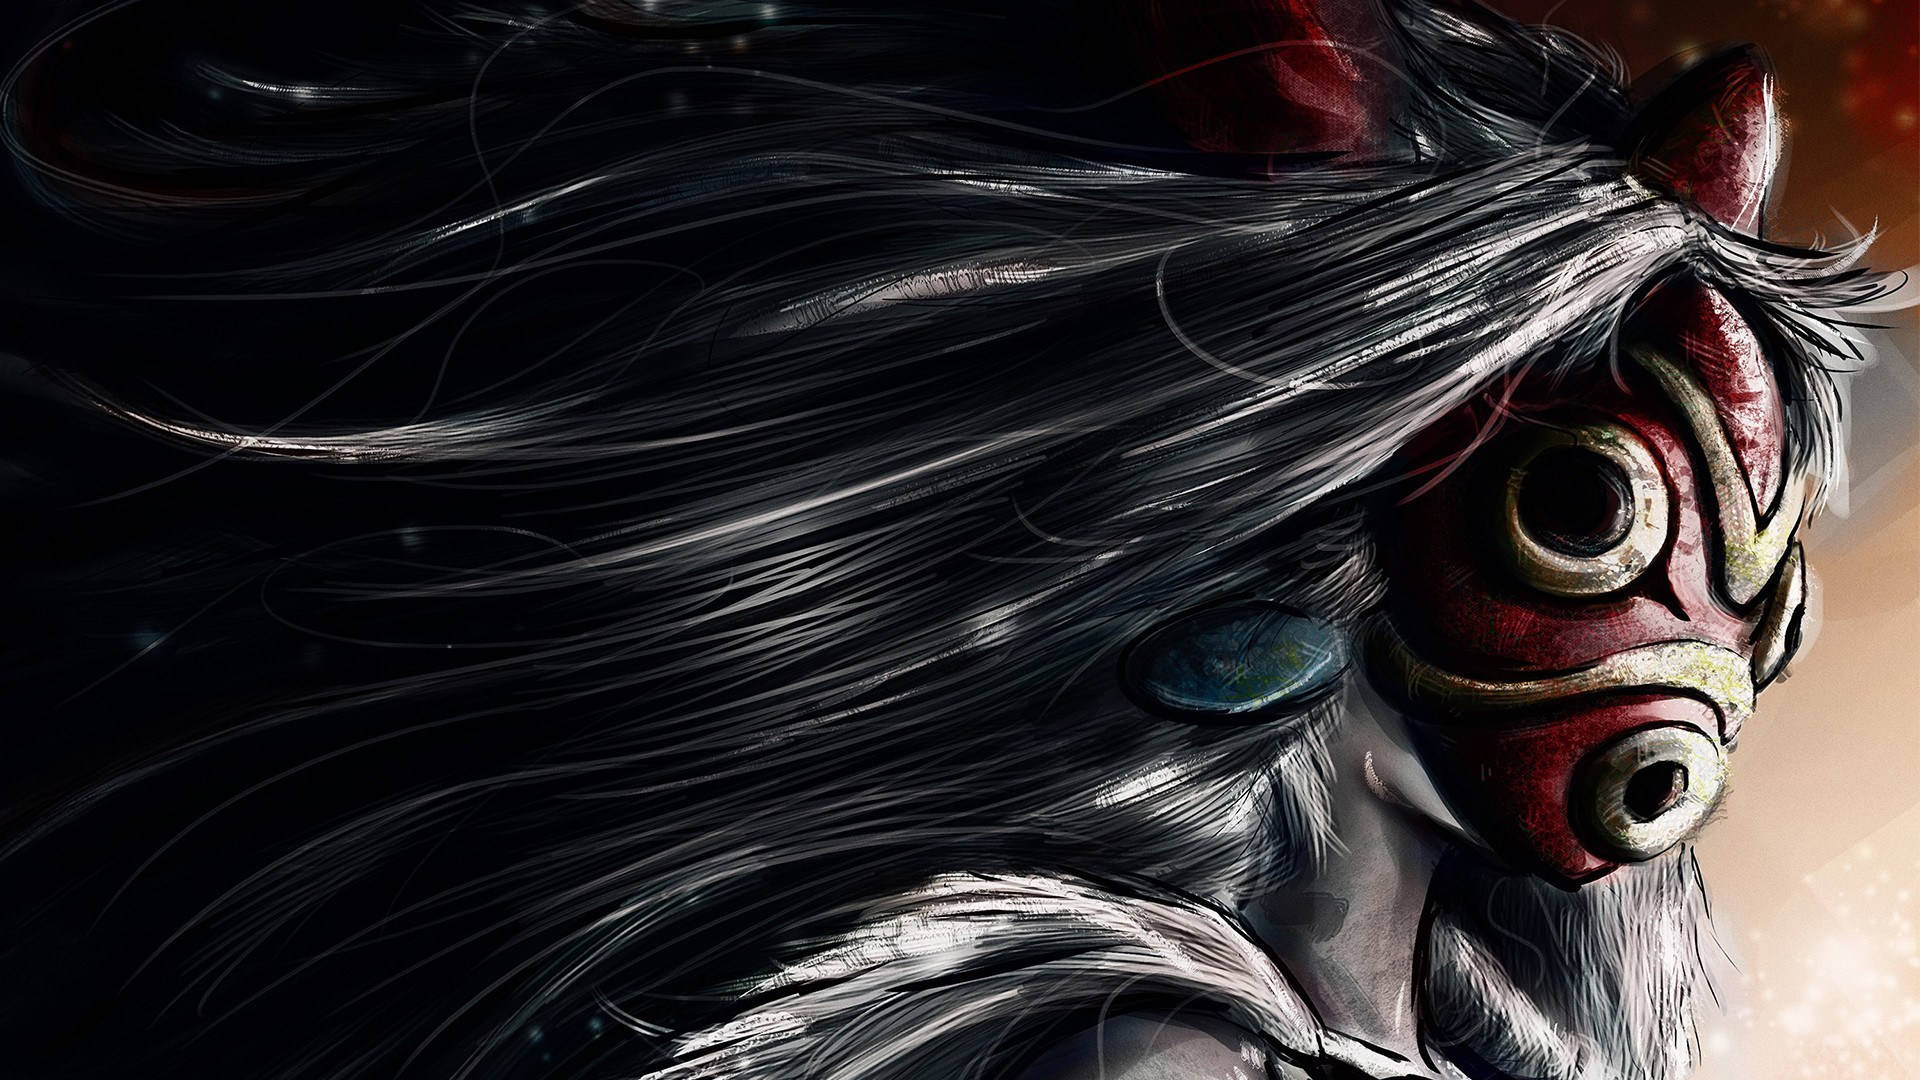 "The Red Mask of Princess Mononoke" Wallpaper